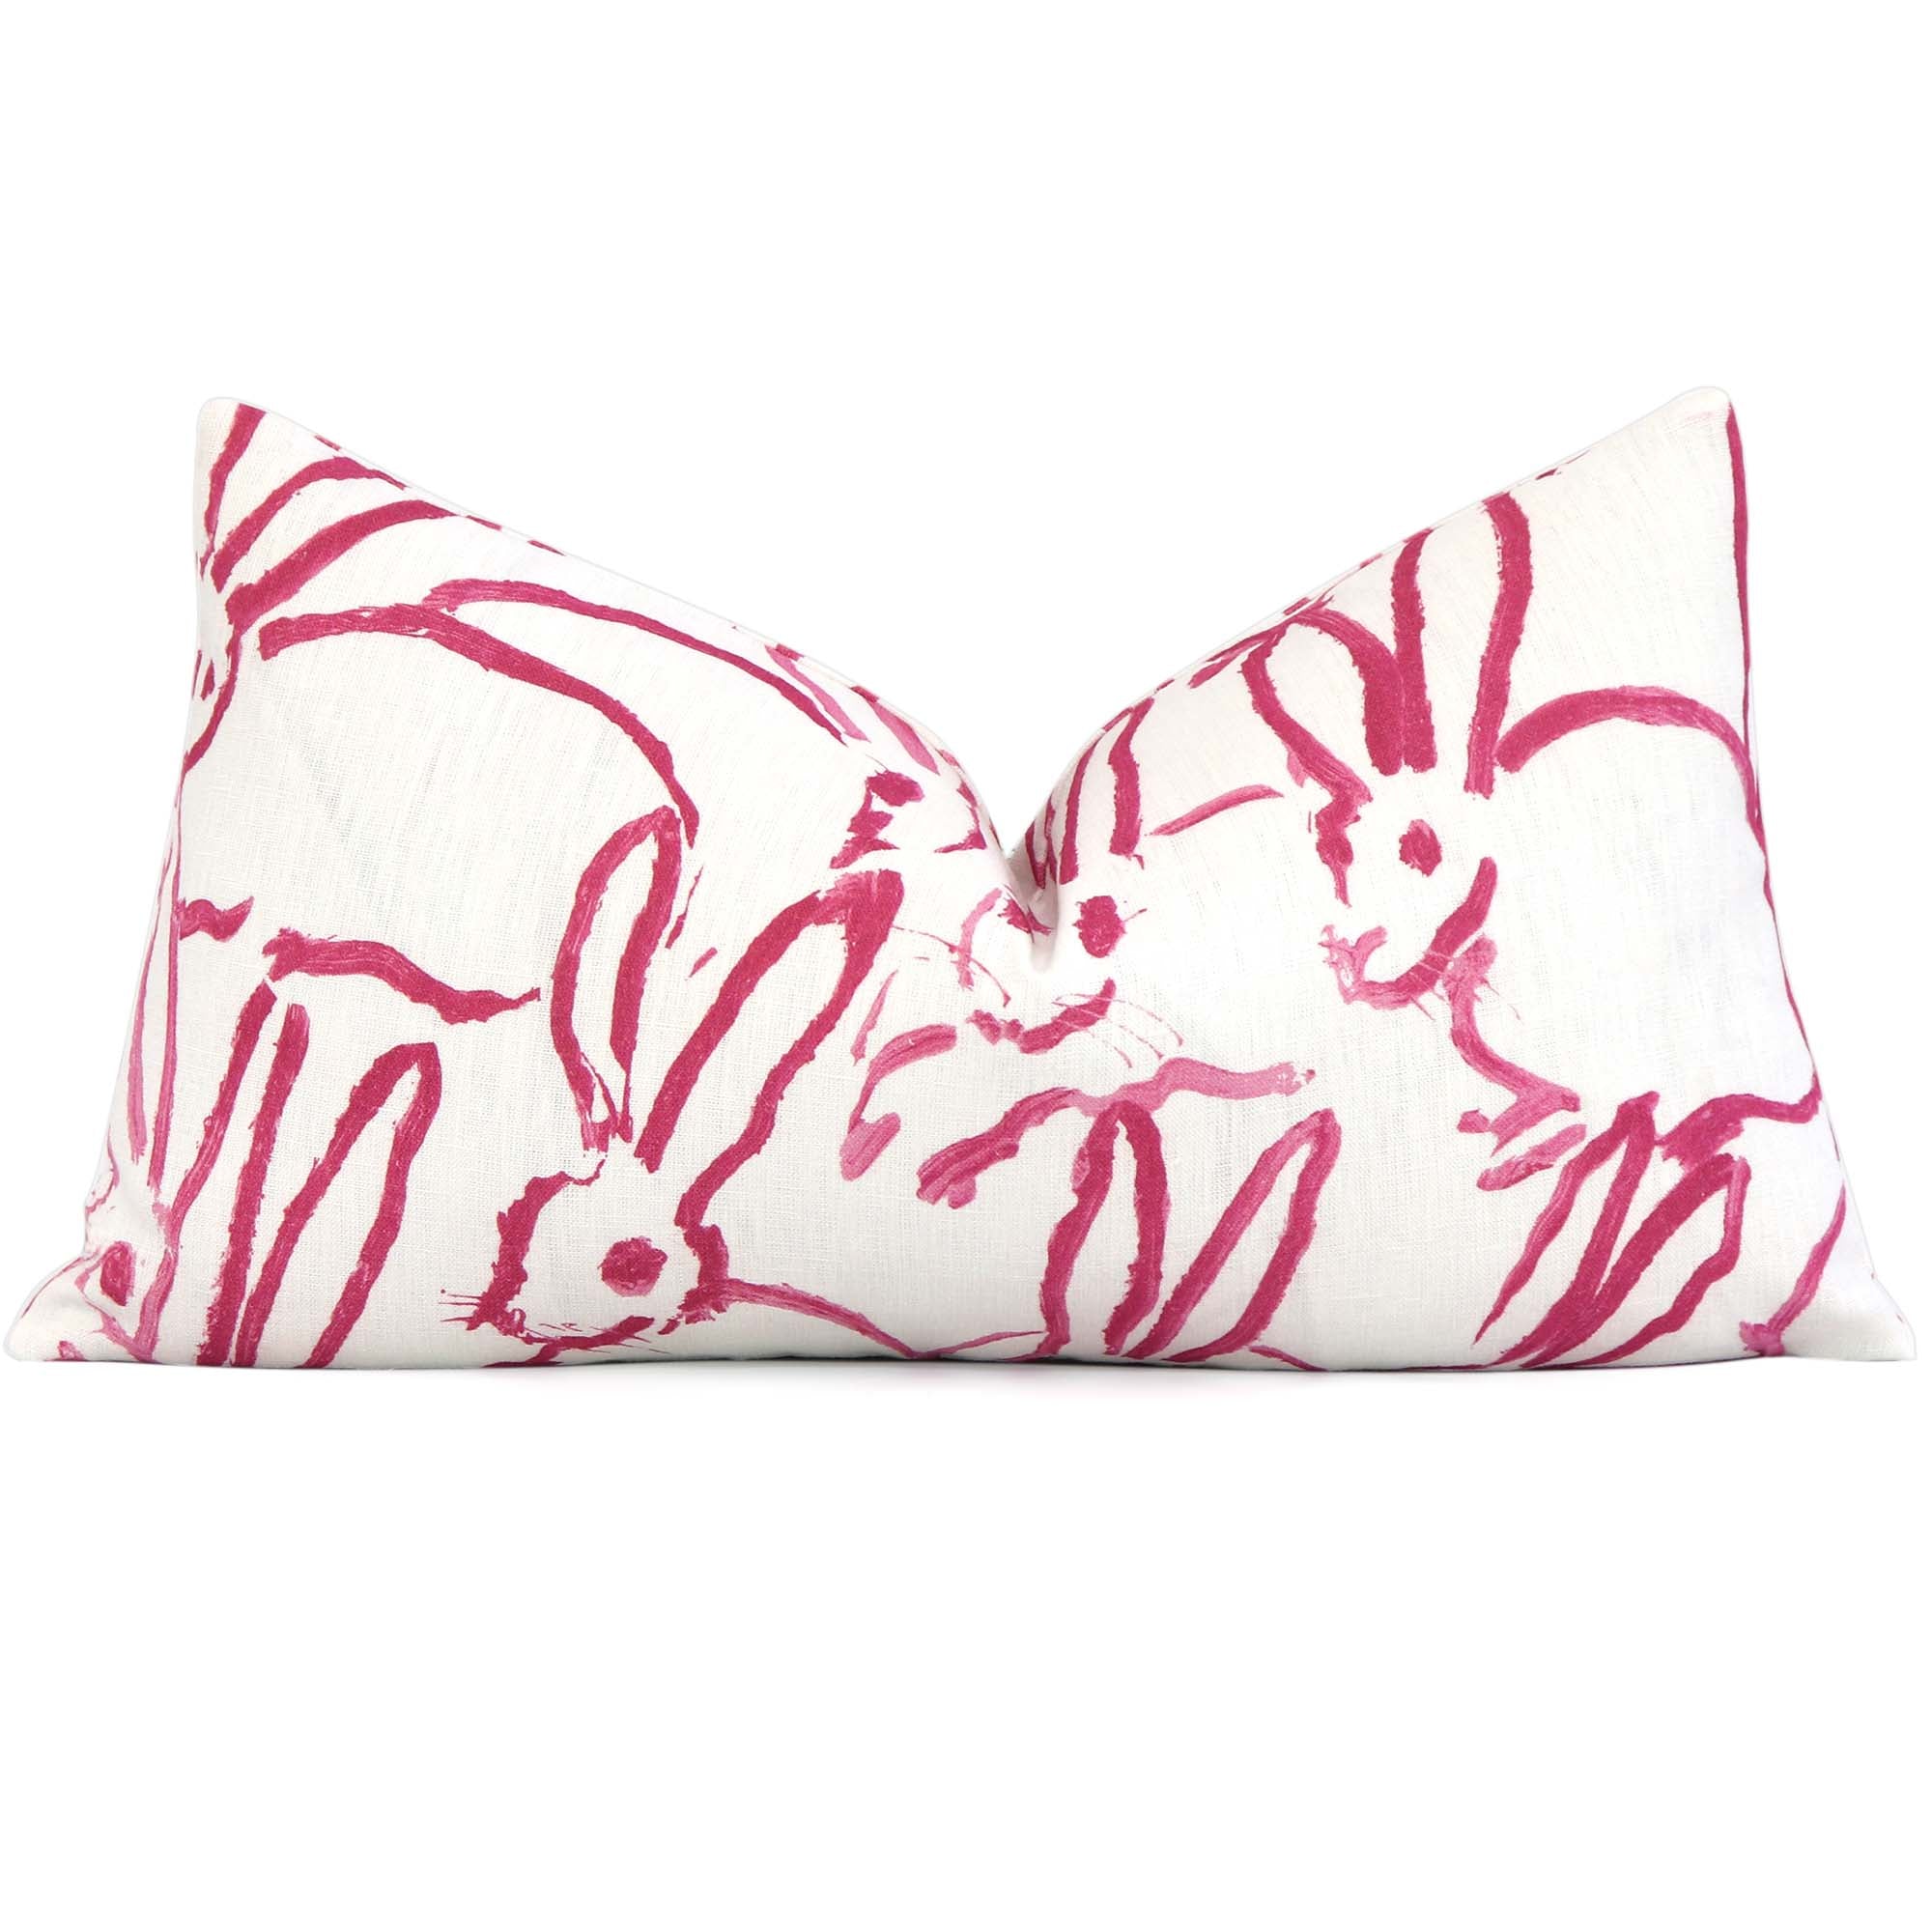 Lee Jofa Groundworks Hutch Pink Bunny Designer Throw Lumbar Pillow Cover